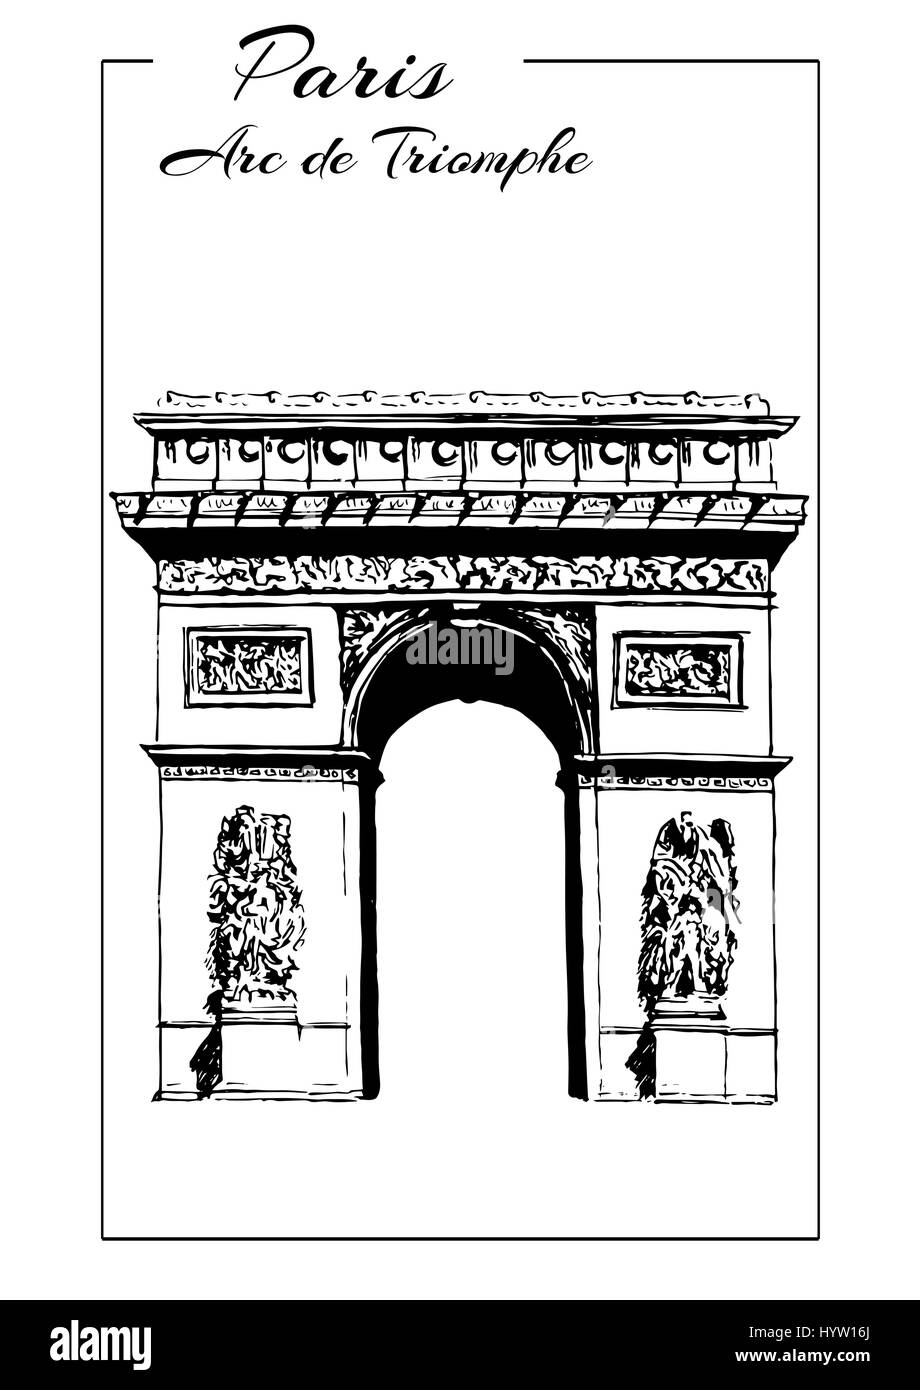 Arc de Triomphe, Paris Frankreich. Triumphbogen. Champs-Elysées, Place Charles de Gaulle. Hand-Zeichnung Skizze-Vektor-Illustration. Touristischer Ort. Kann Stock Vektor